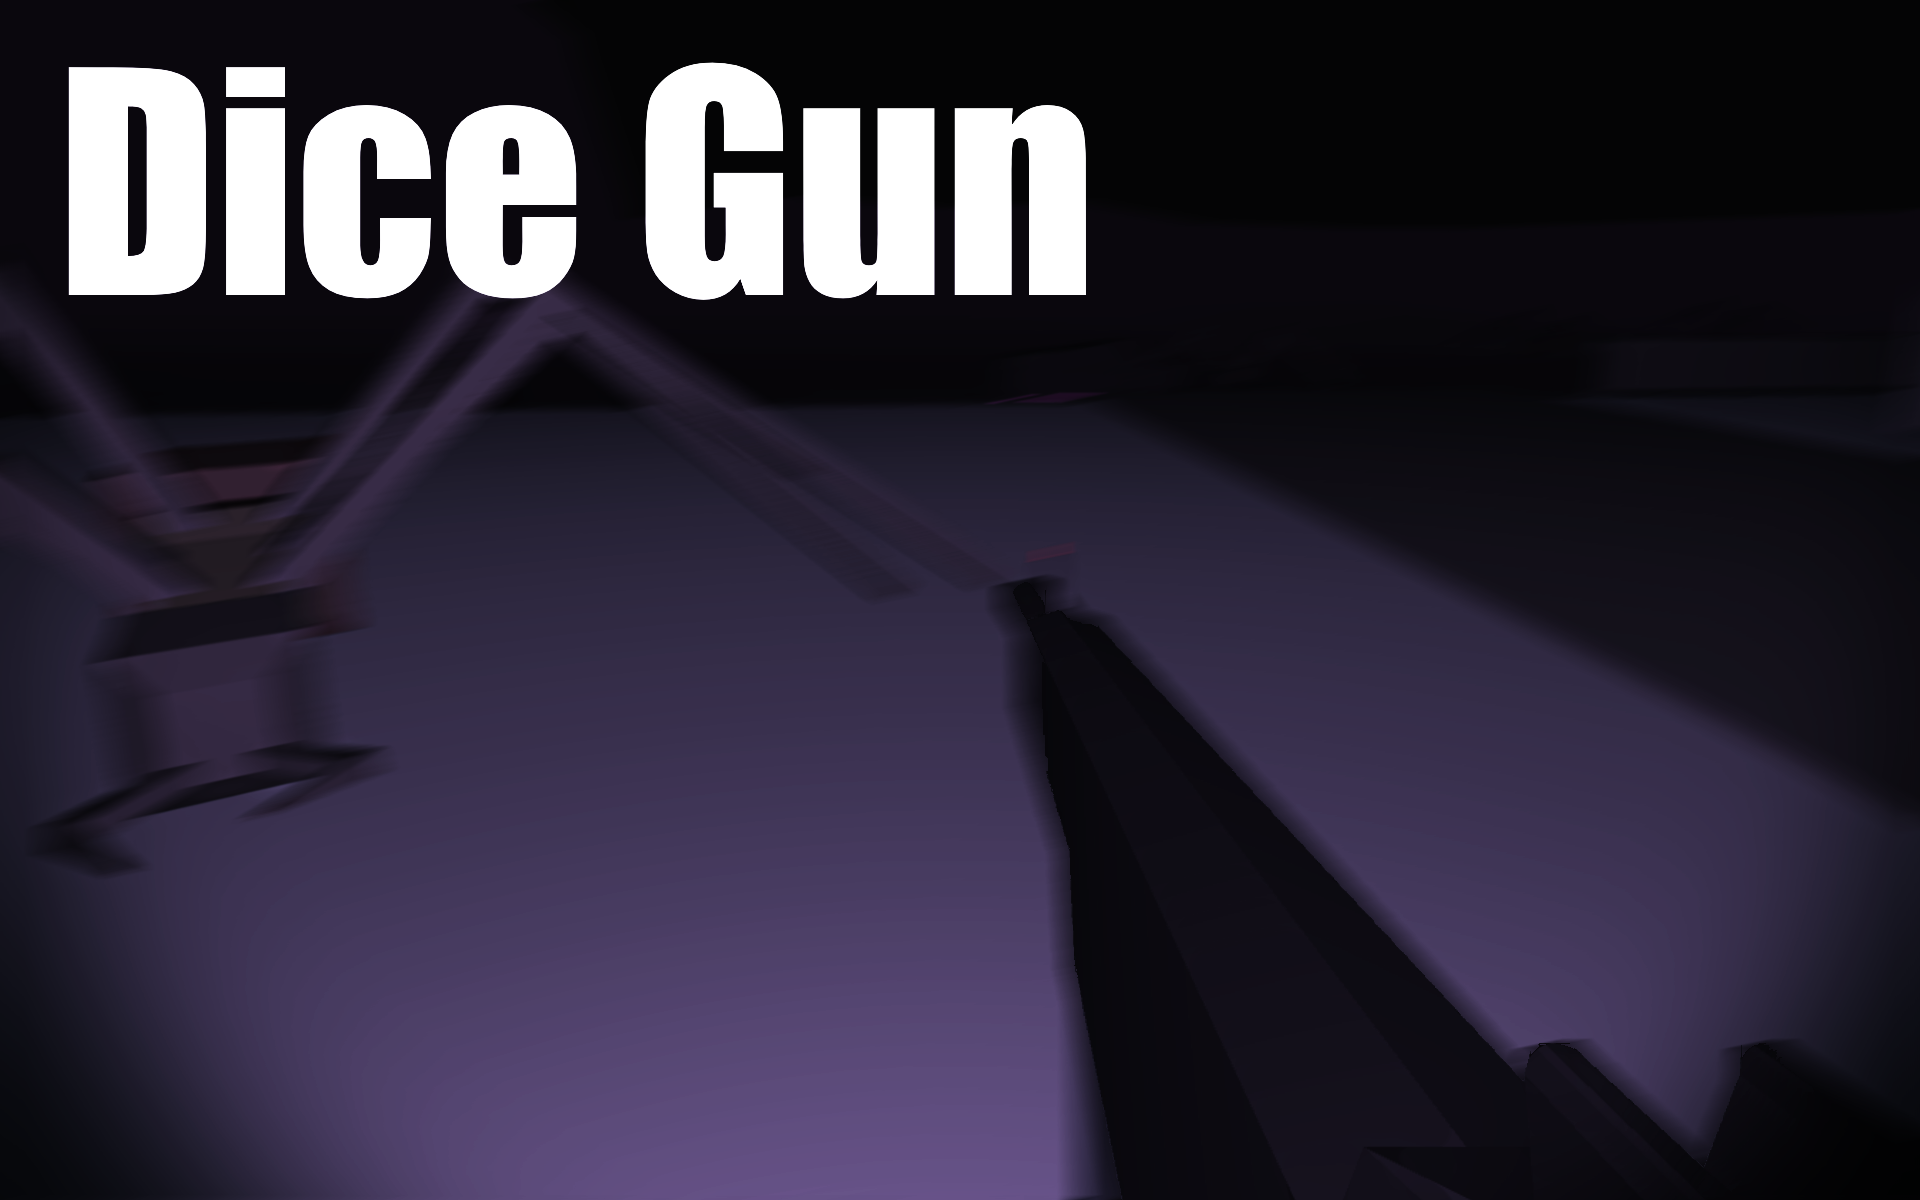 Dice Gun